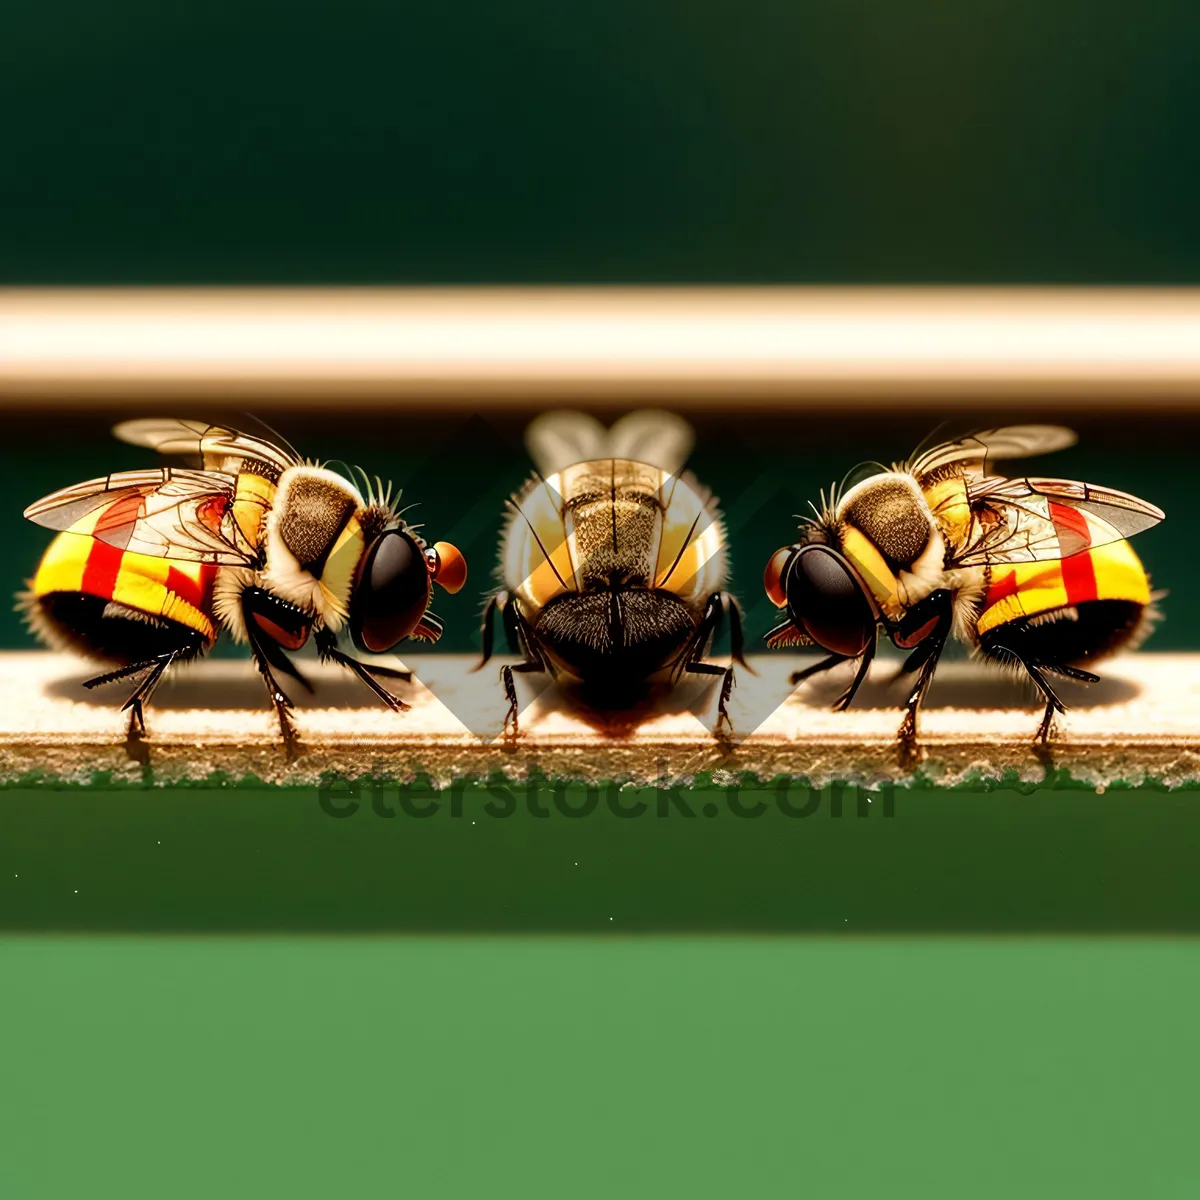 Picture of Vibrant Ladybug on Green Leaf - Close-up Nature Shot